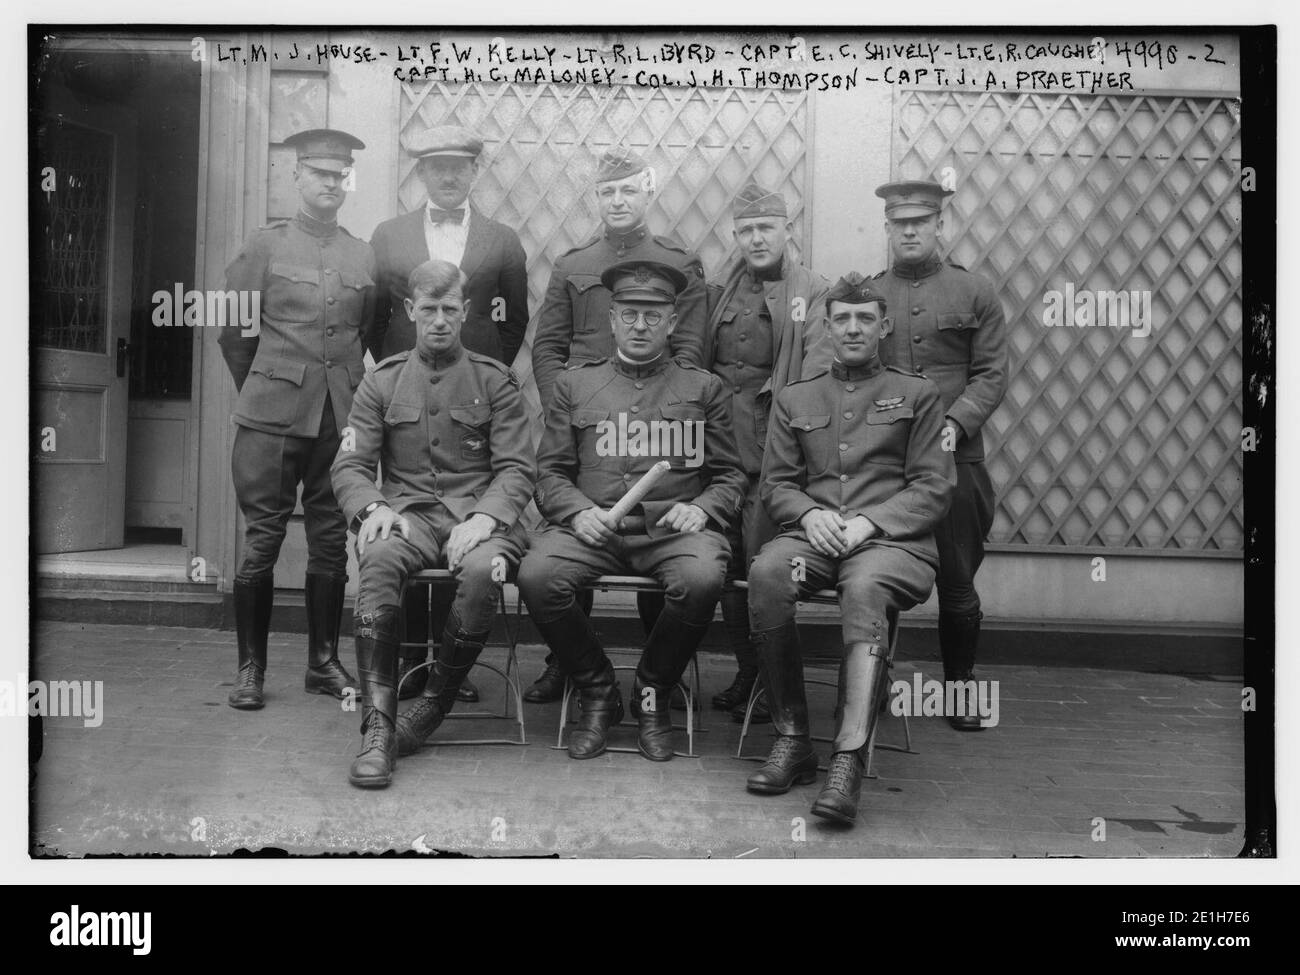 Lt. M.J. Haus, Lt F.W. Kelly, Lt. R.L. Byrd, Kapitän E.C. Shively, Lt E.R. Caughey, Kapitän H.C. Maloney, Kol. J.H. Thompson, Kapitän J.A. Praether Stockfoto